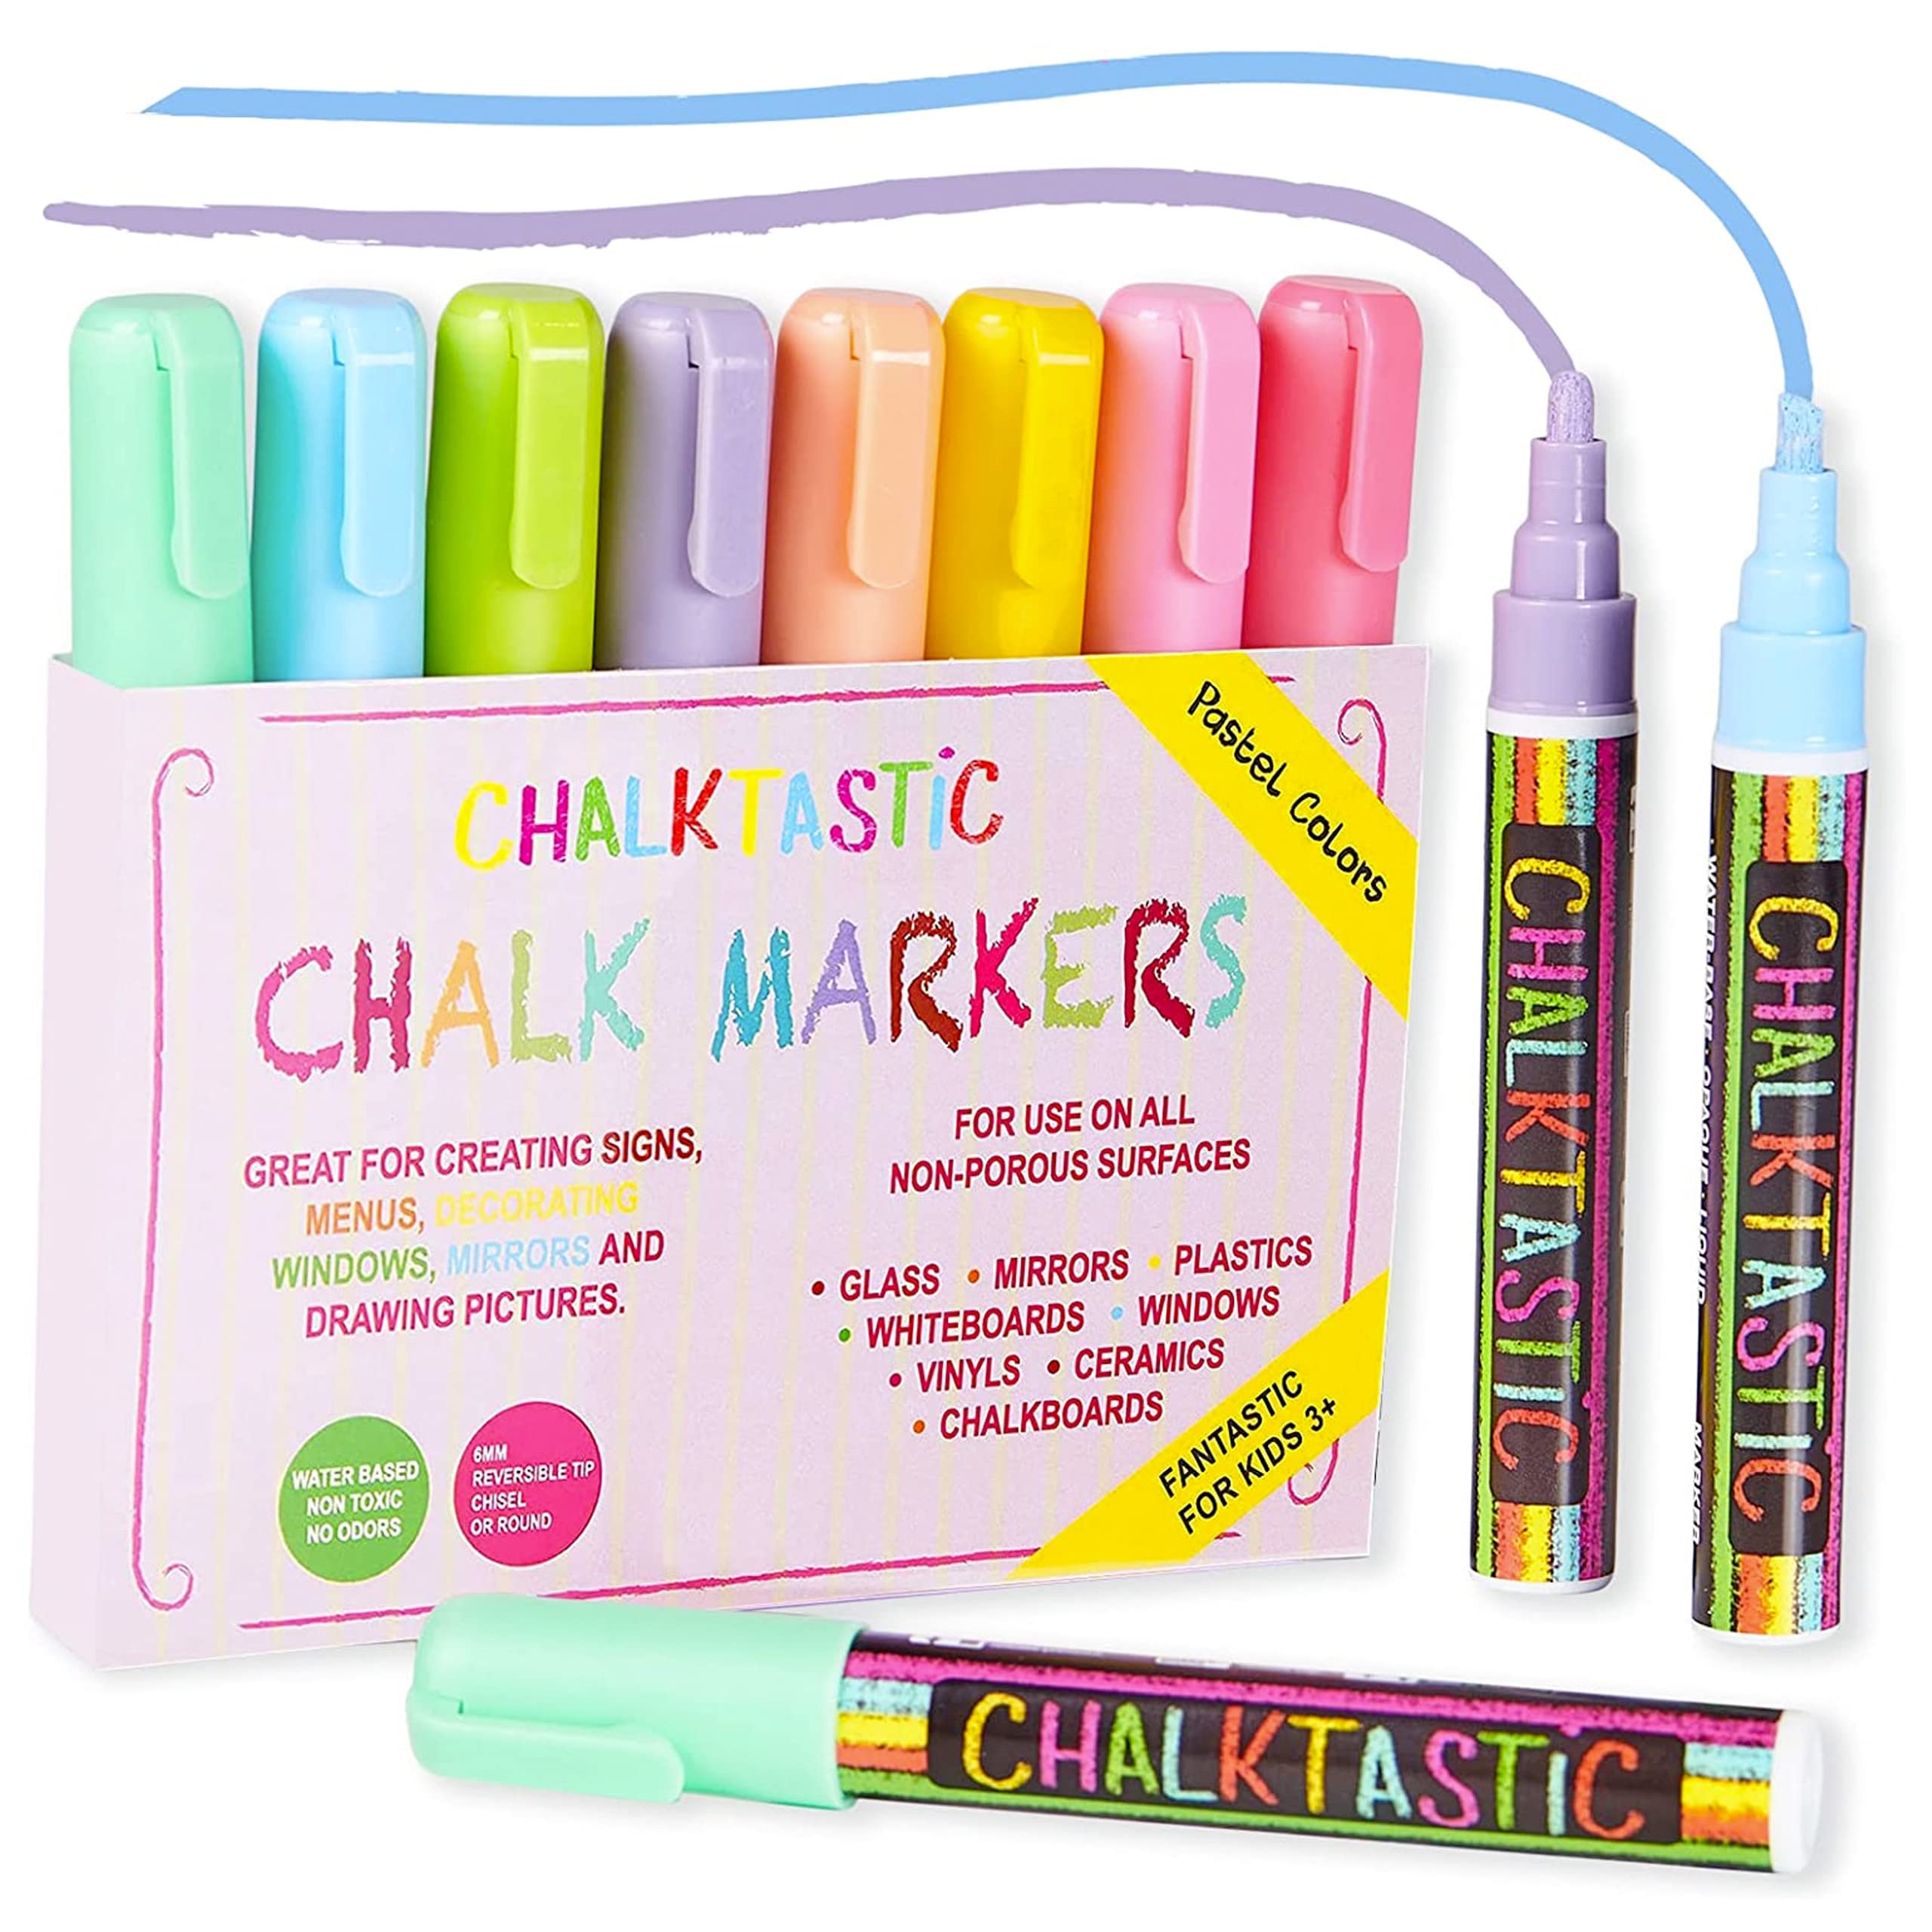 Chalktastic 1 chalktastic Liquid chalk Markers for Kids - Set of 8